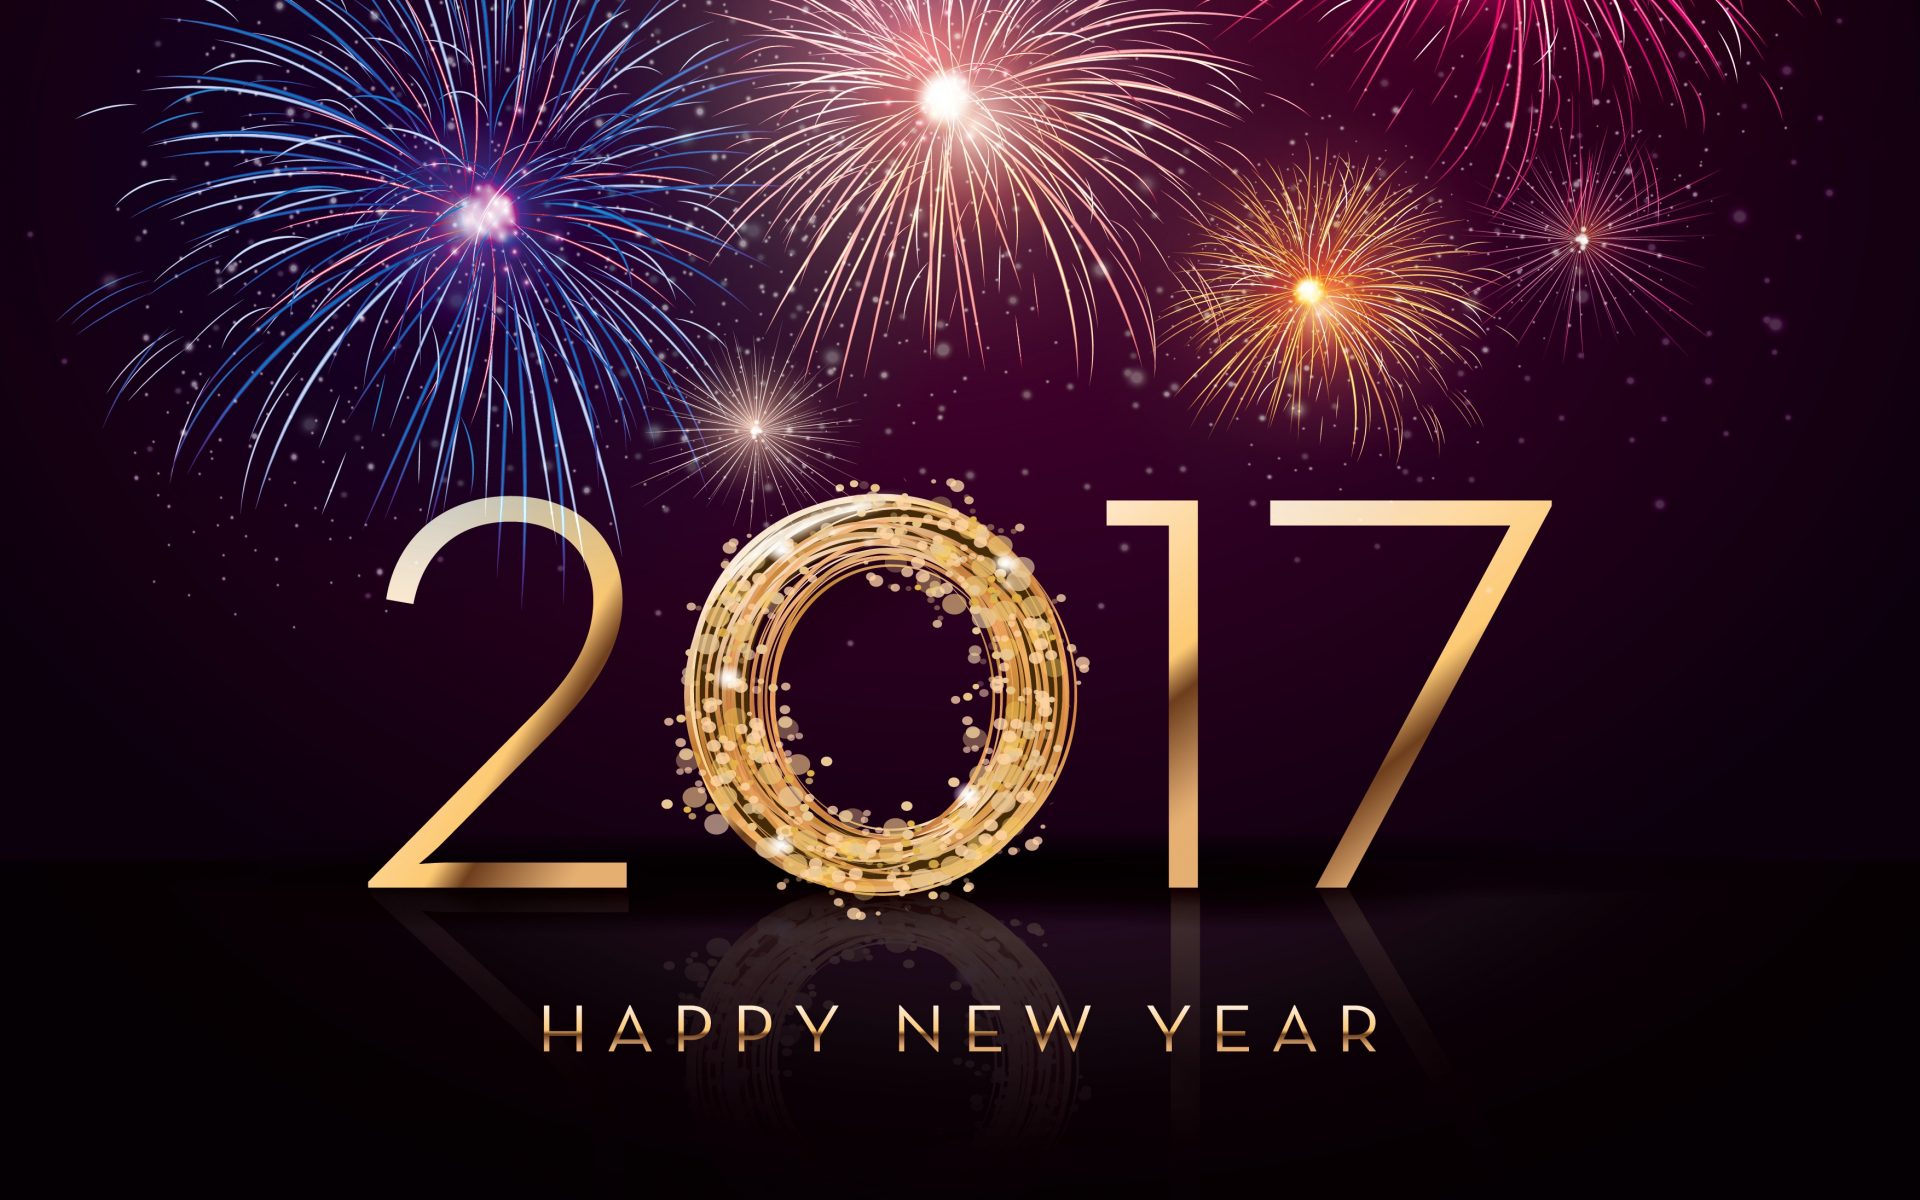 New Year 2017 Greetings Wallpaper